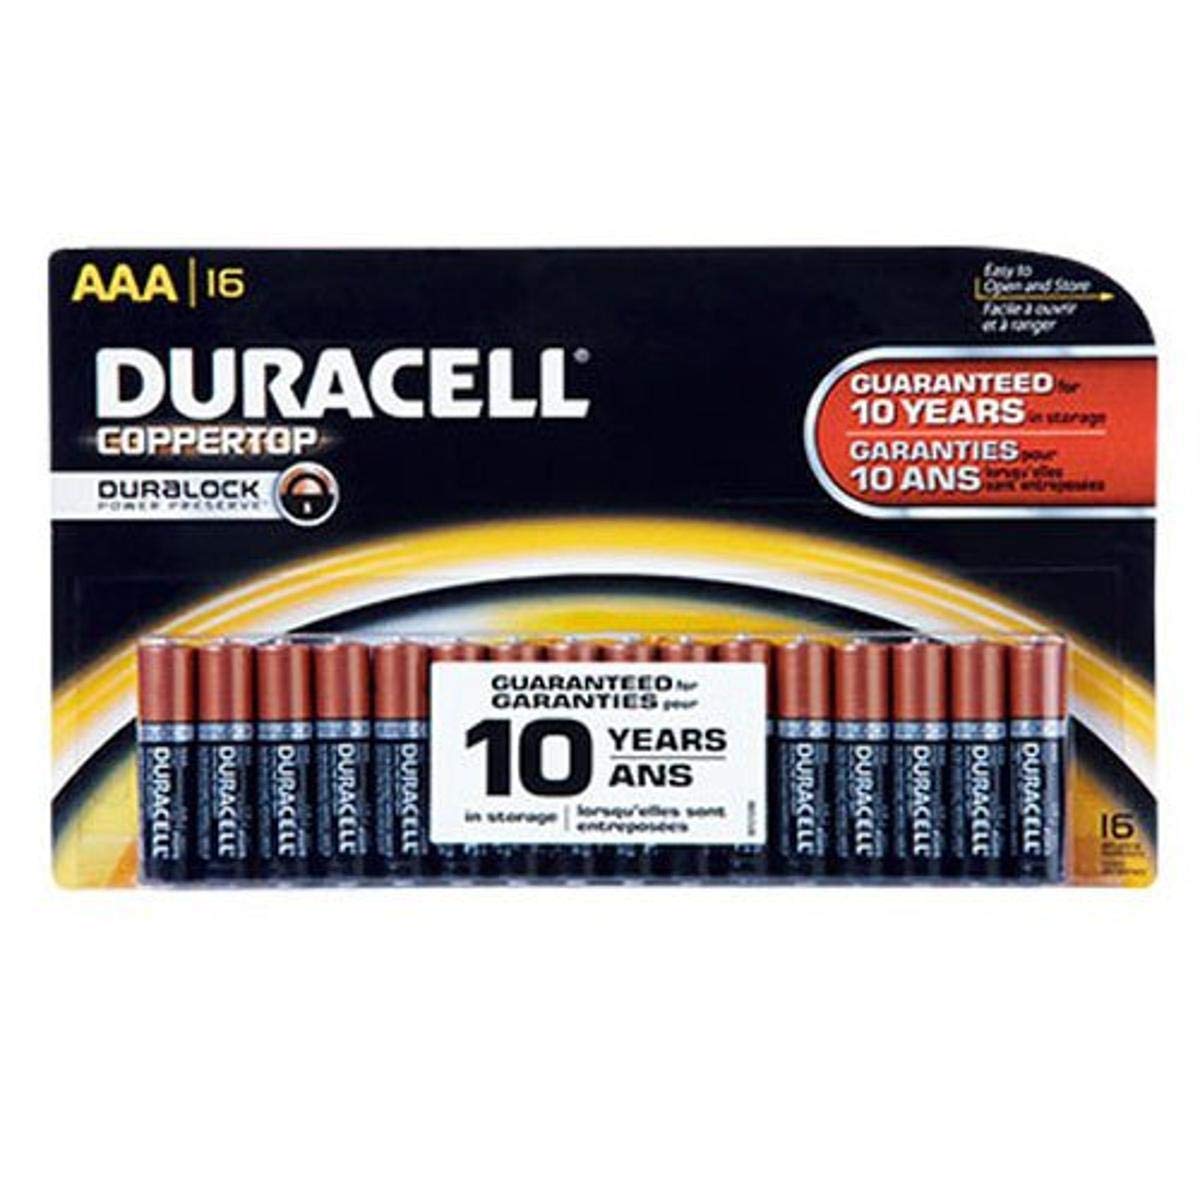 Duracell Coppertop AAA Alkaline Batteries, 16 Ct